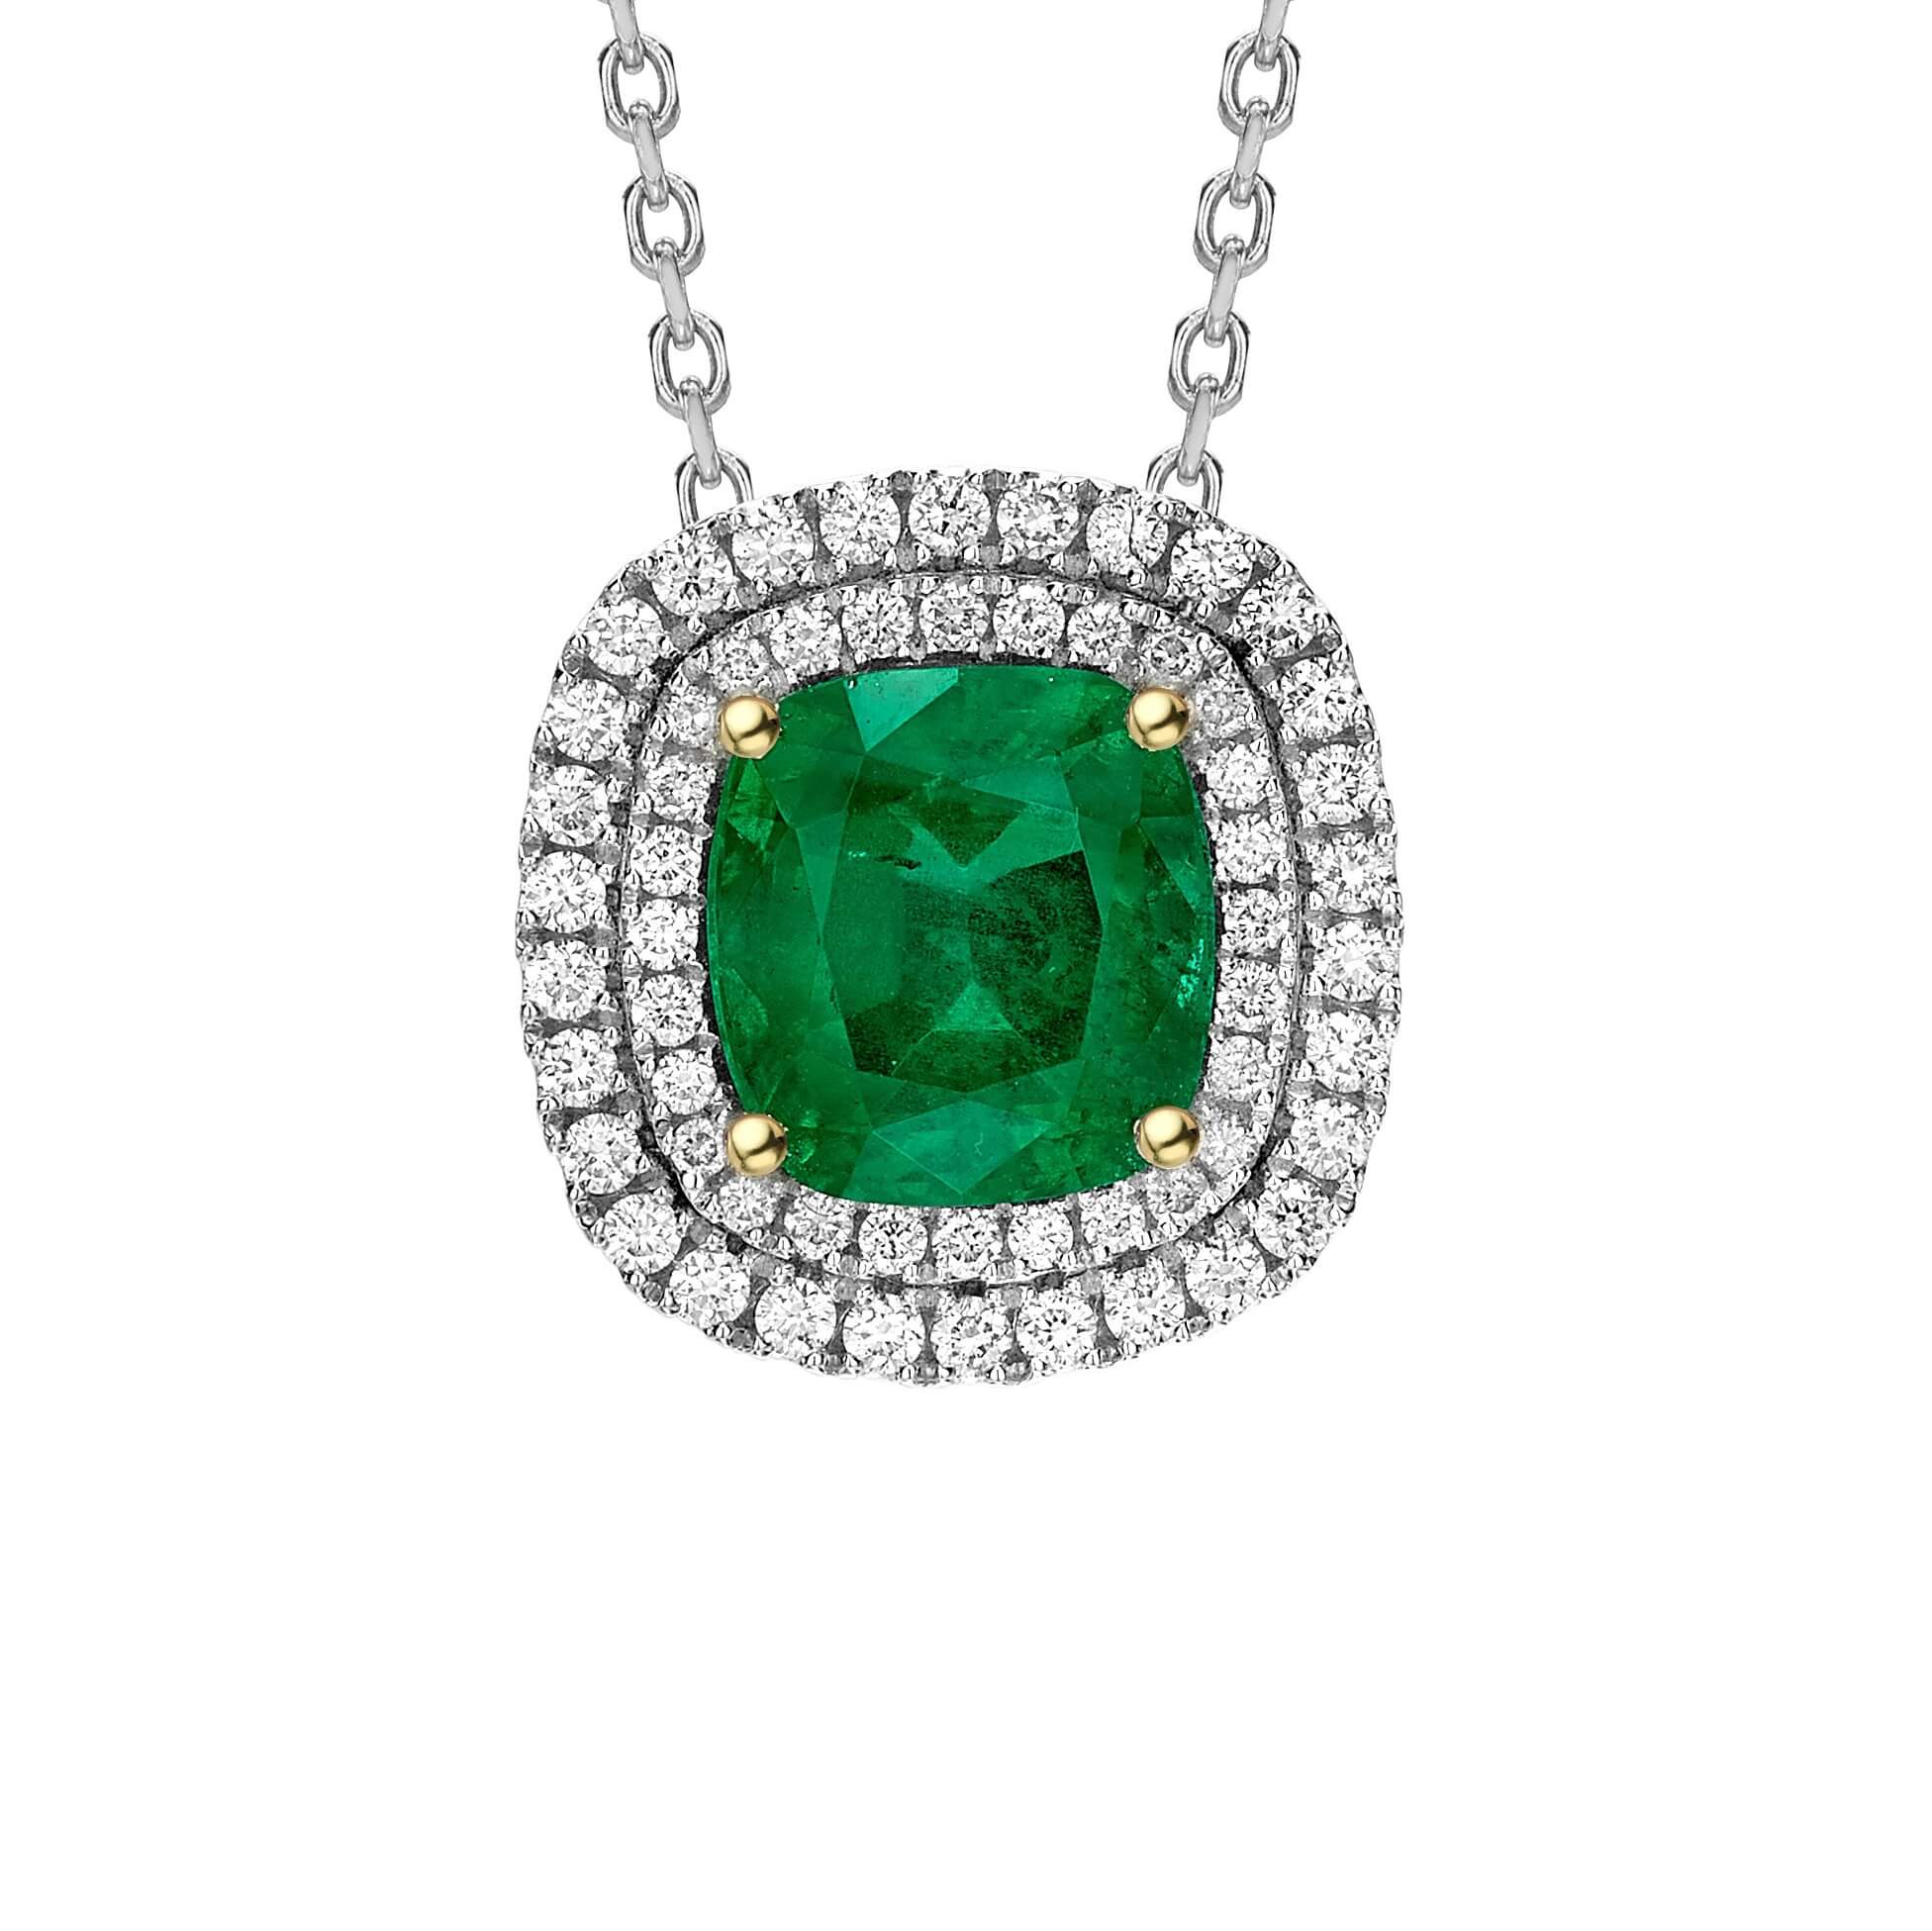 Emerald and diamond pendant - The Diamond Trust